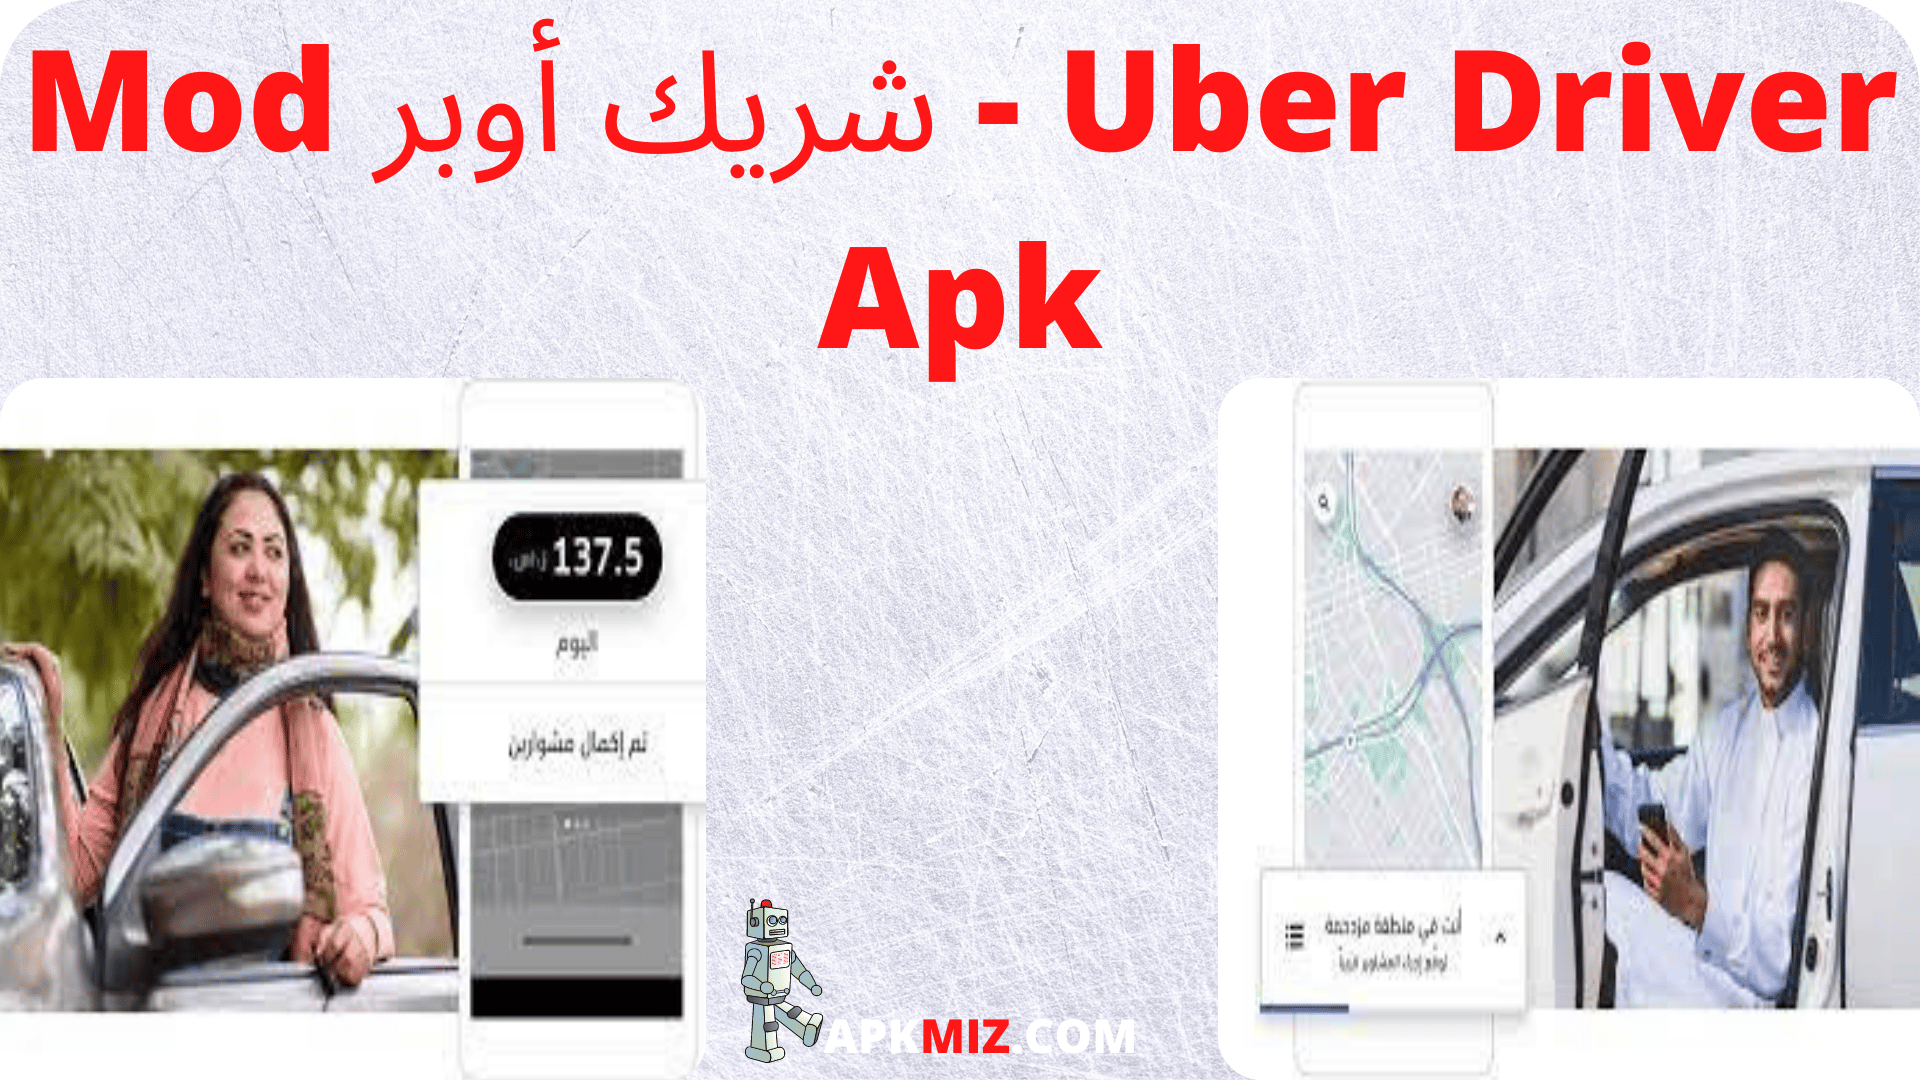 Uber Driver - شريك أوبر Mod Apk